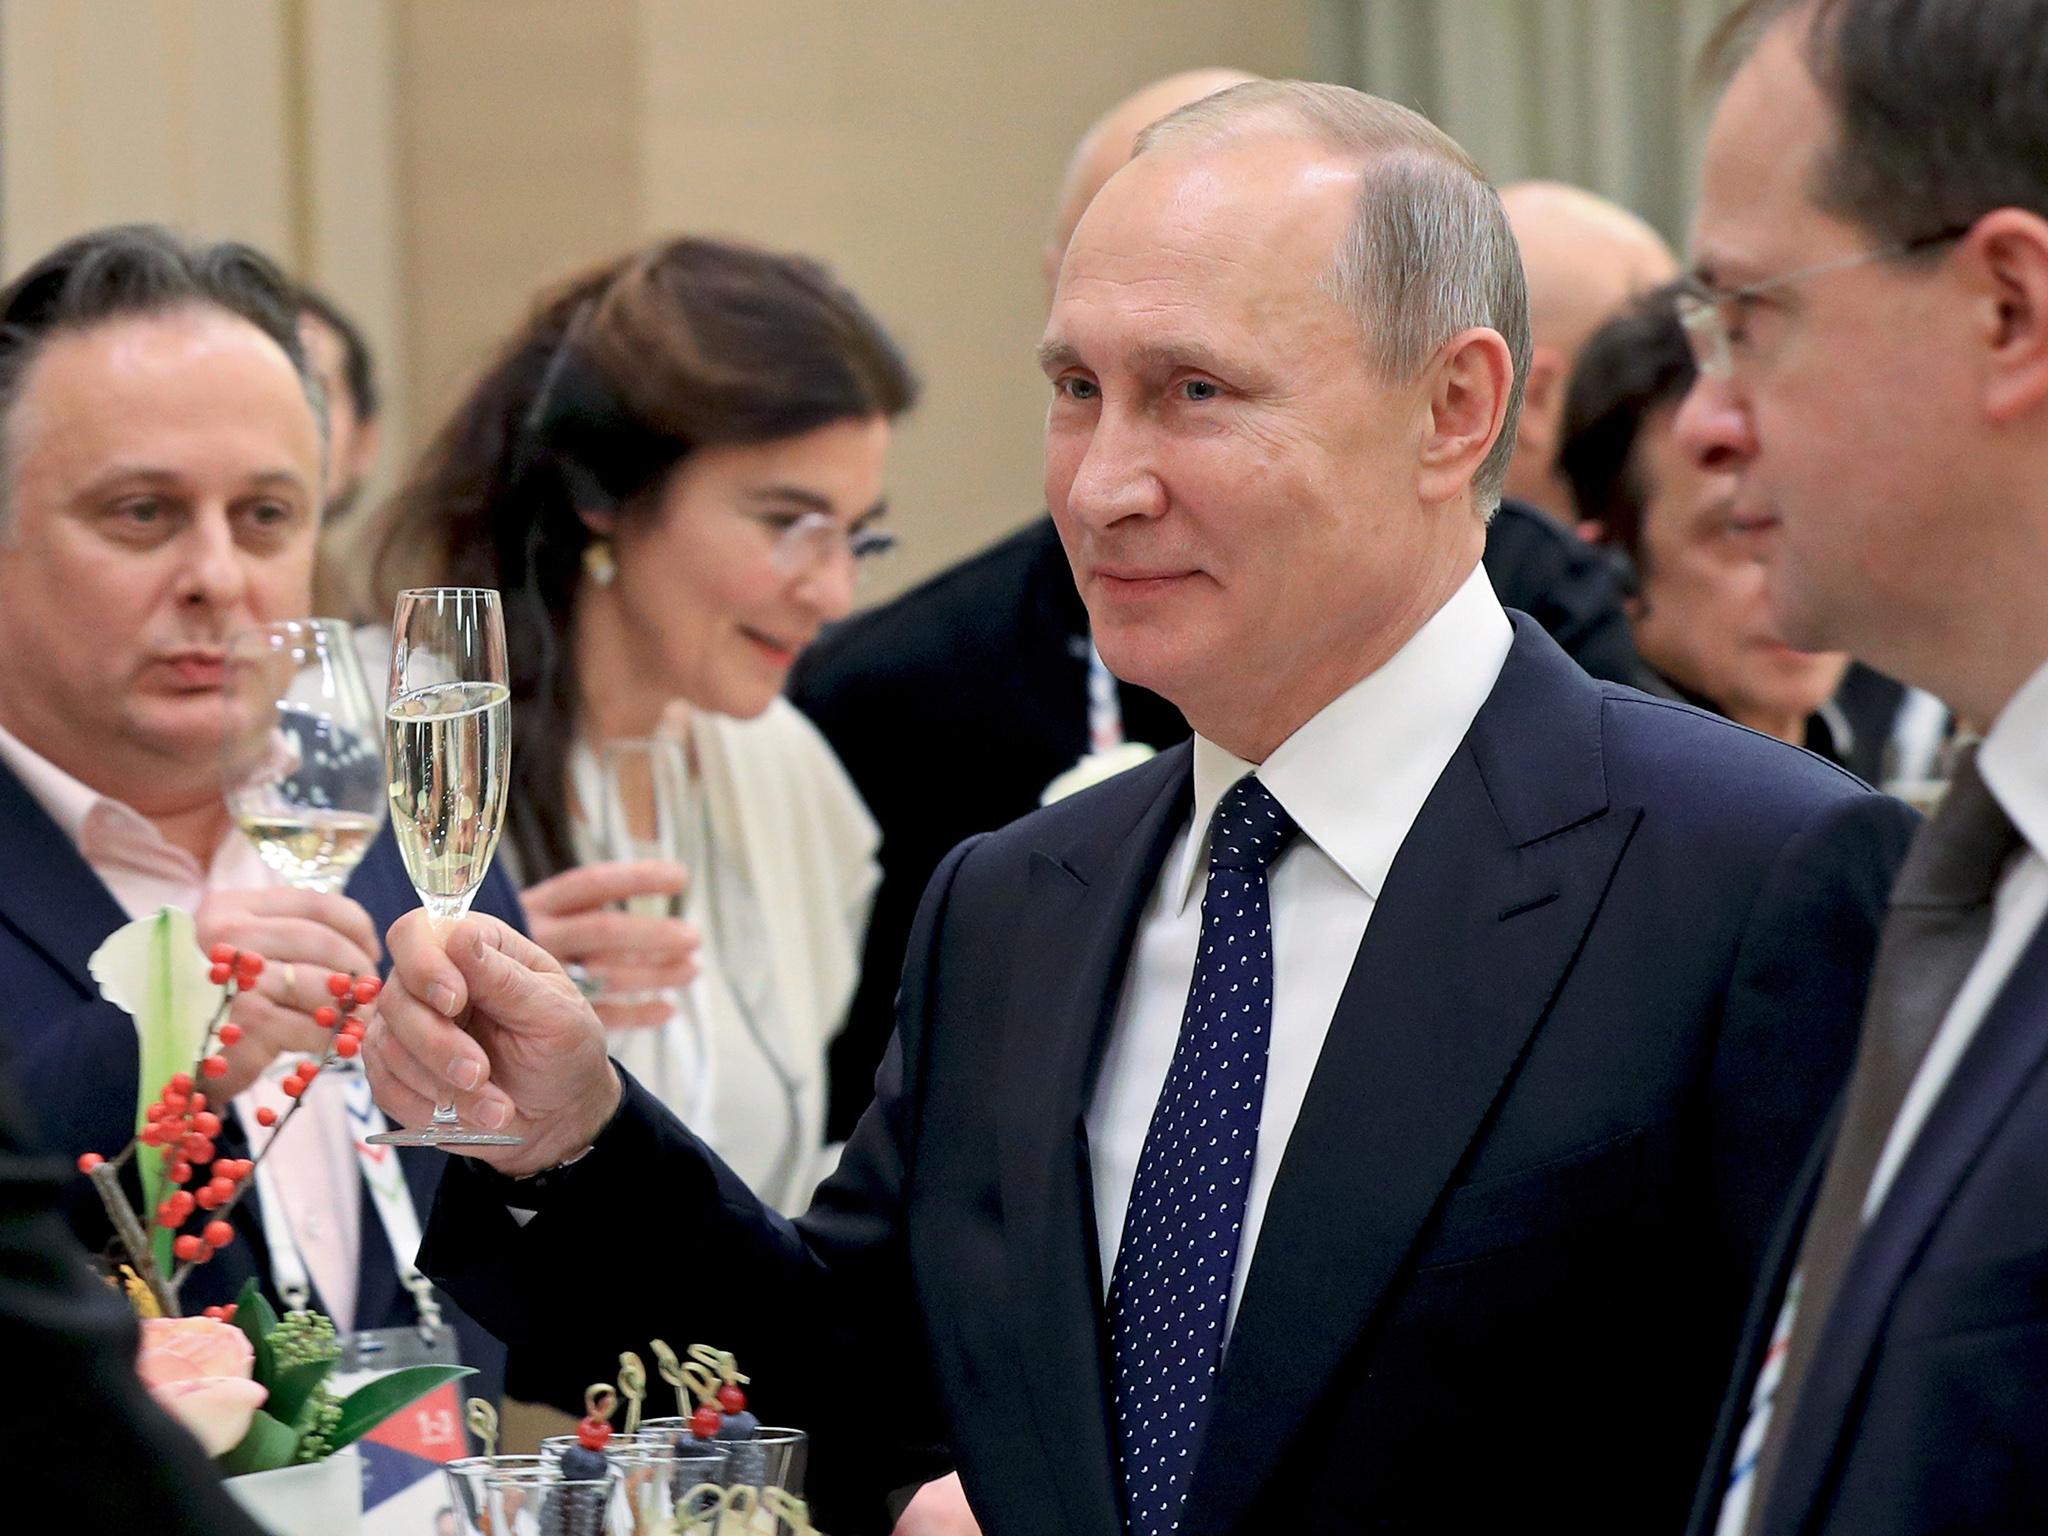 Russian President Vladimir Putin has welcomed Mr Trump's election victory